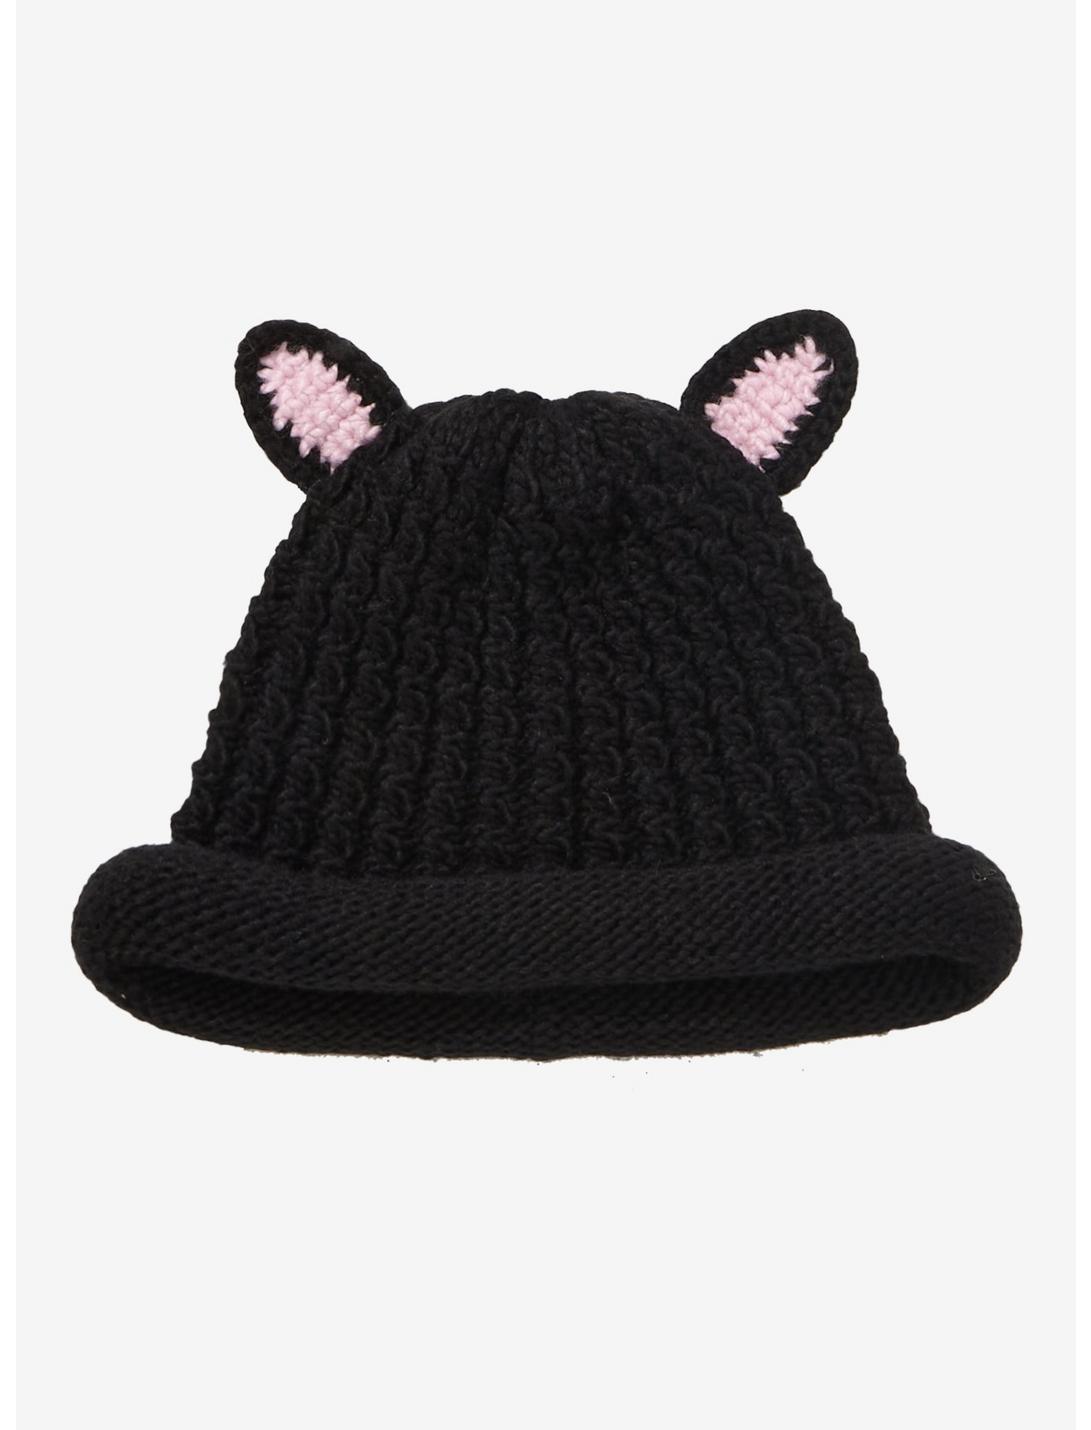 Black Cat Ears Knit Beanie, , hi-res